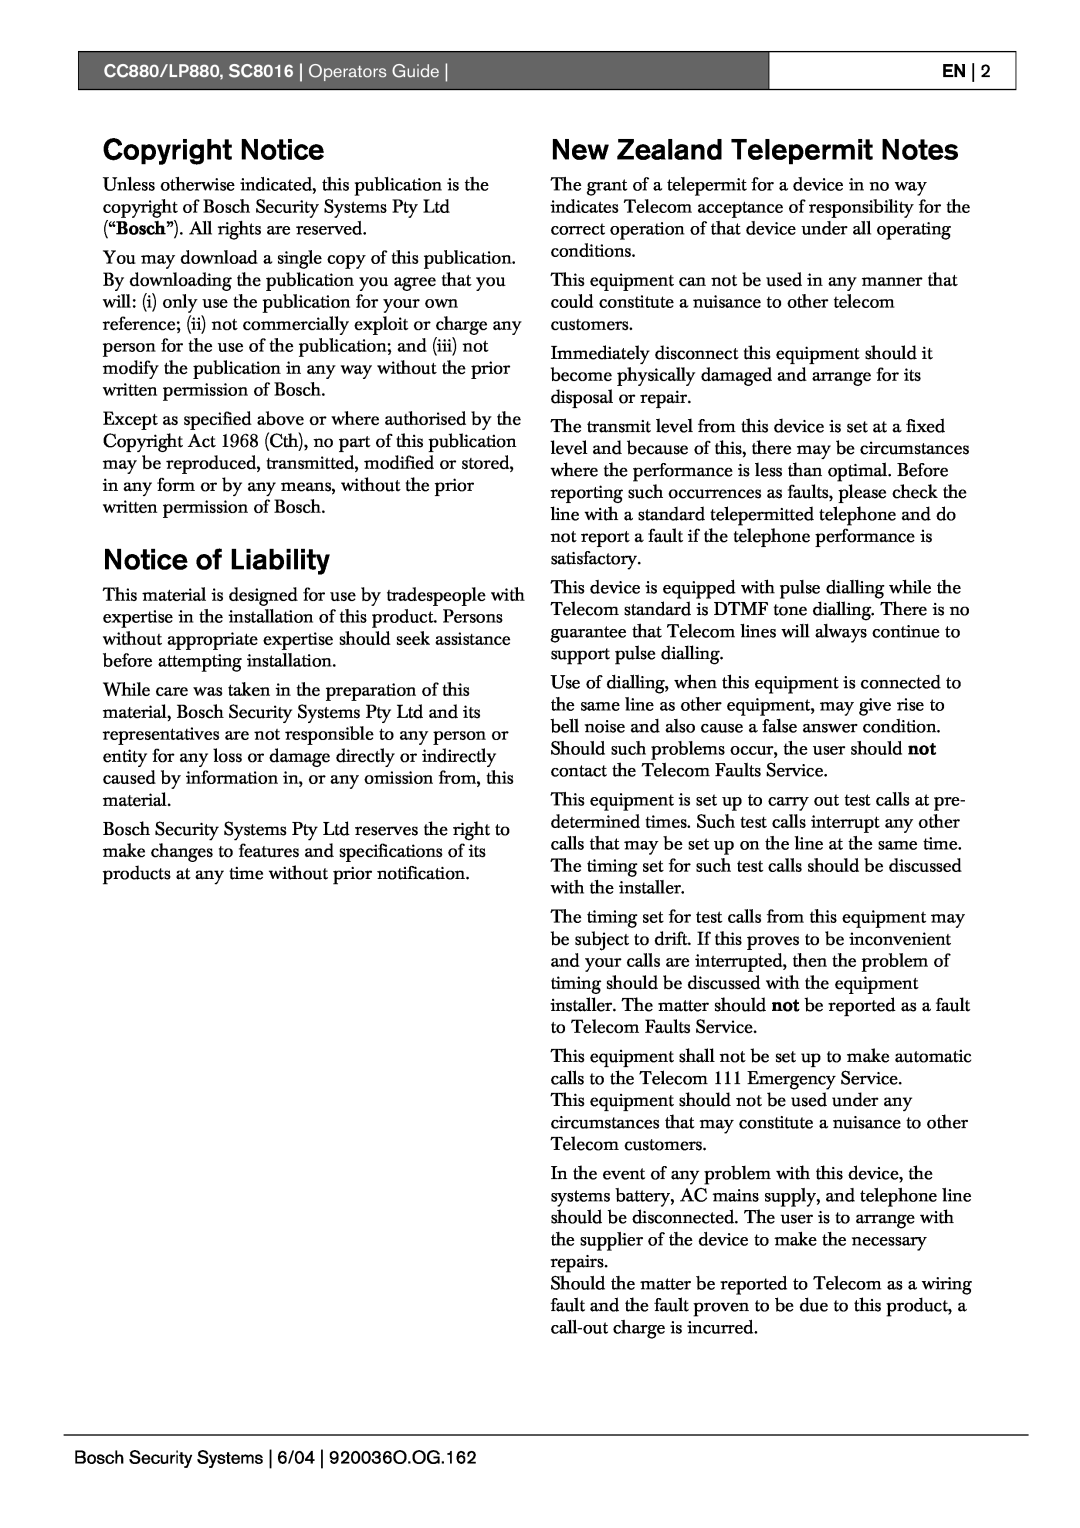 Bosch Appliances CC880, LP880 manual Copyright Notice, Notice of Liability, New Zealand Telepermit Notes, En 